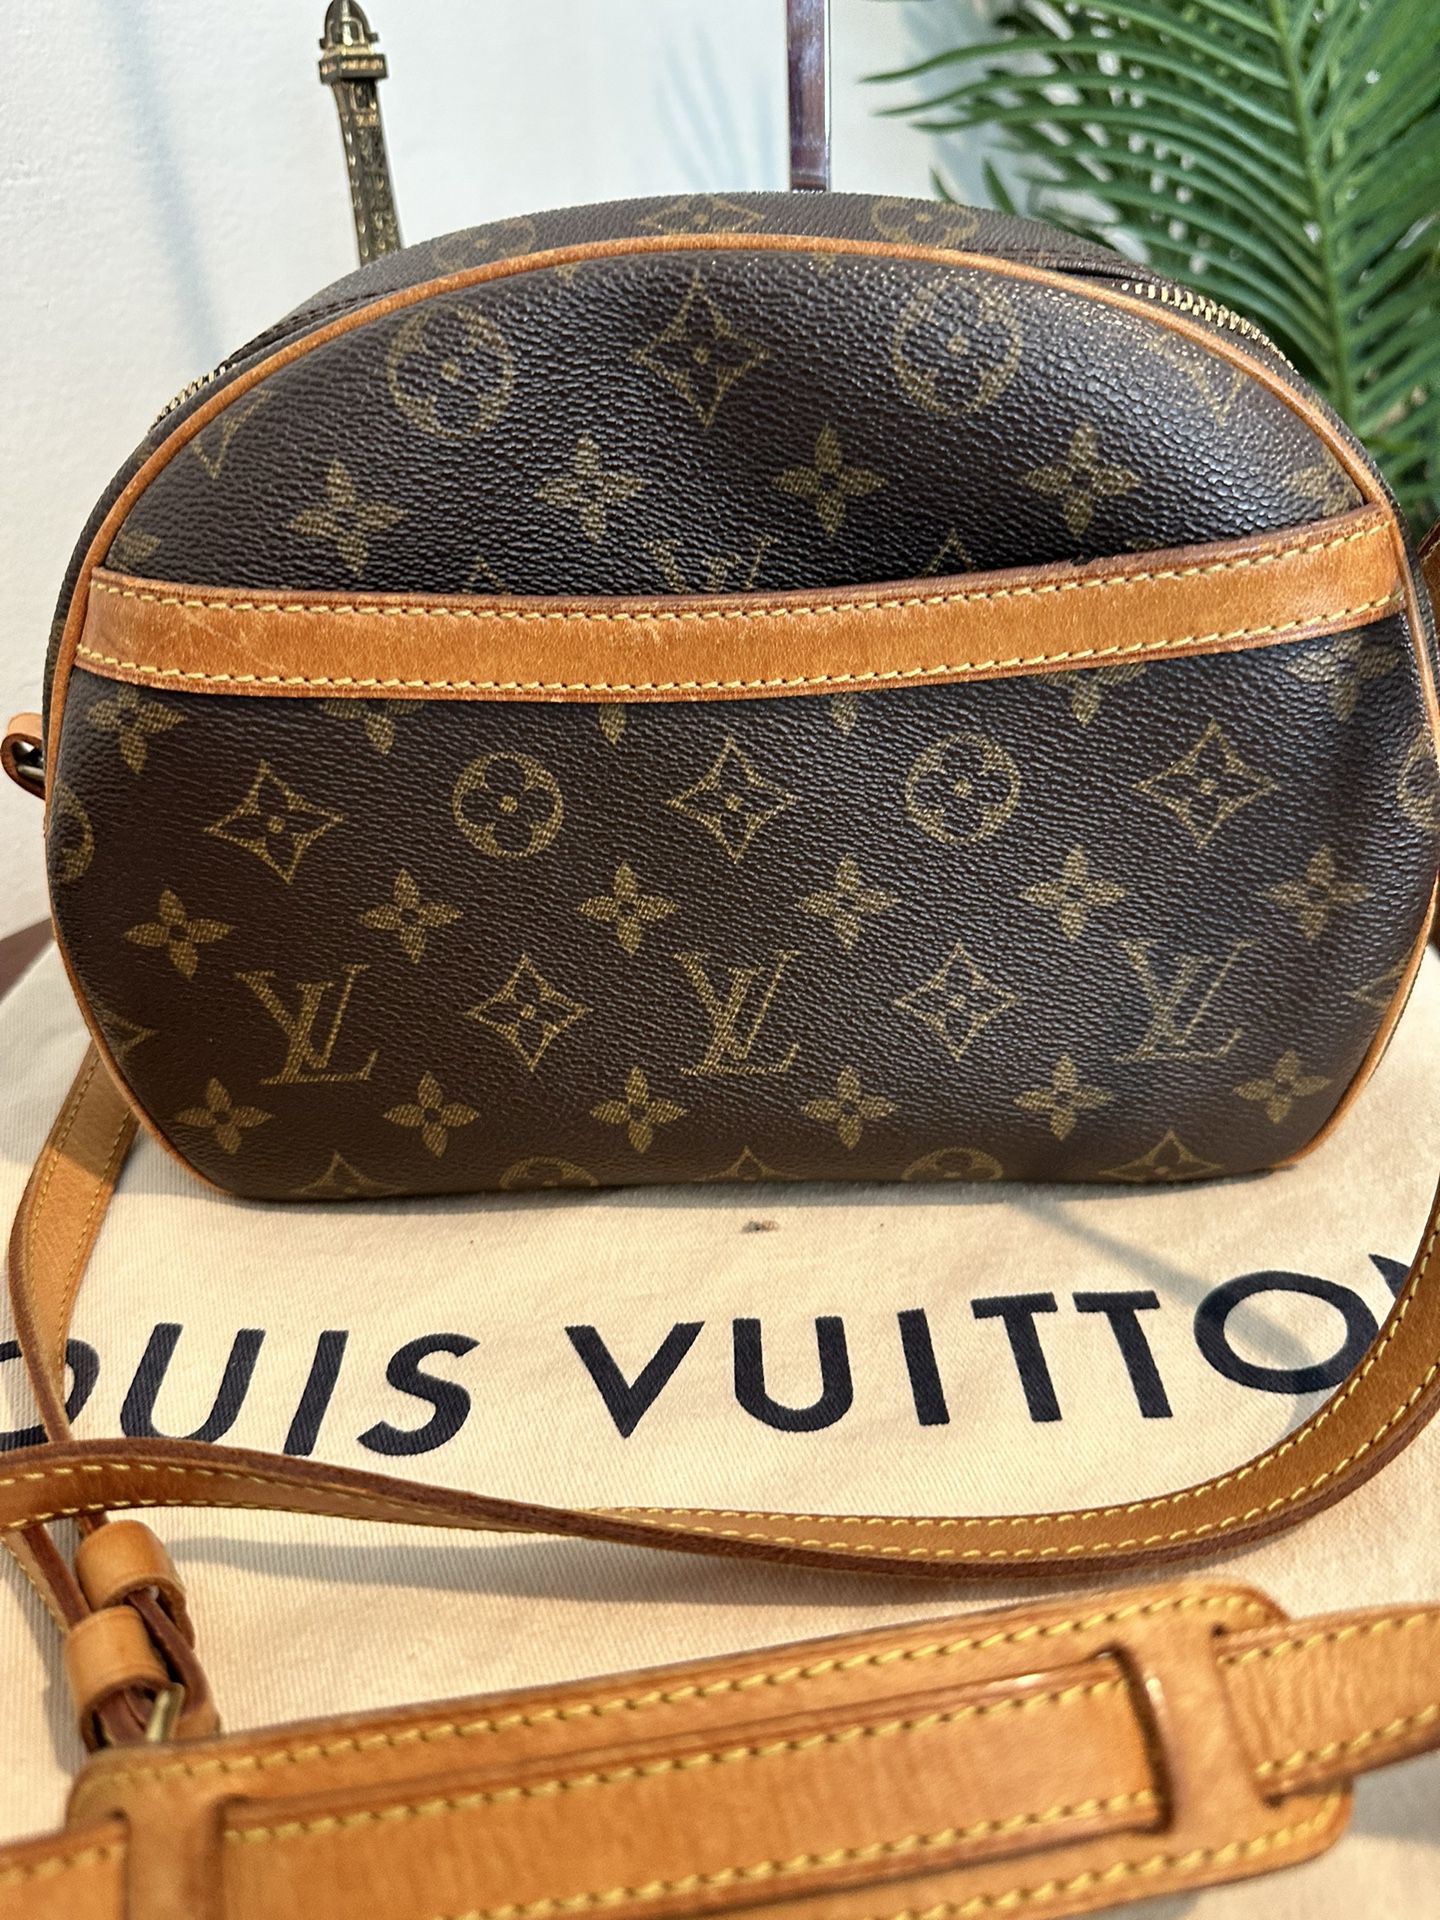 Authentic LOUIS VUITTON Blois Bag for Sale in Los Angeles, CA - OfferUp